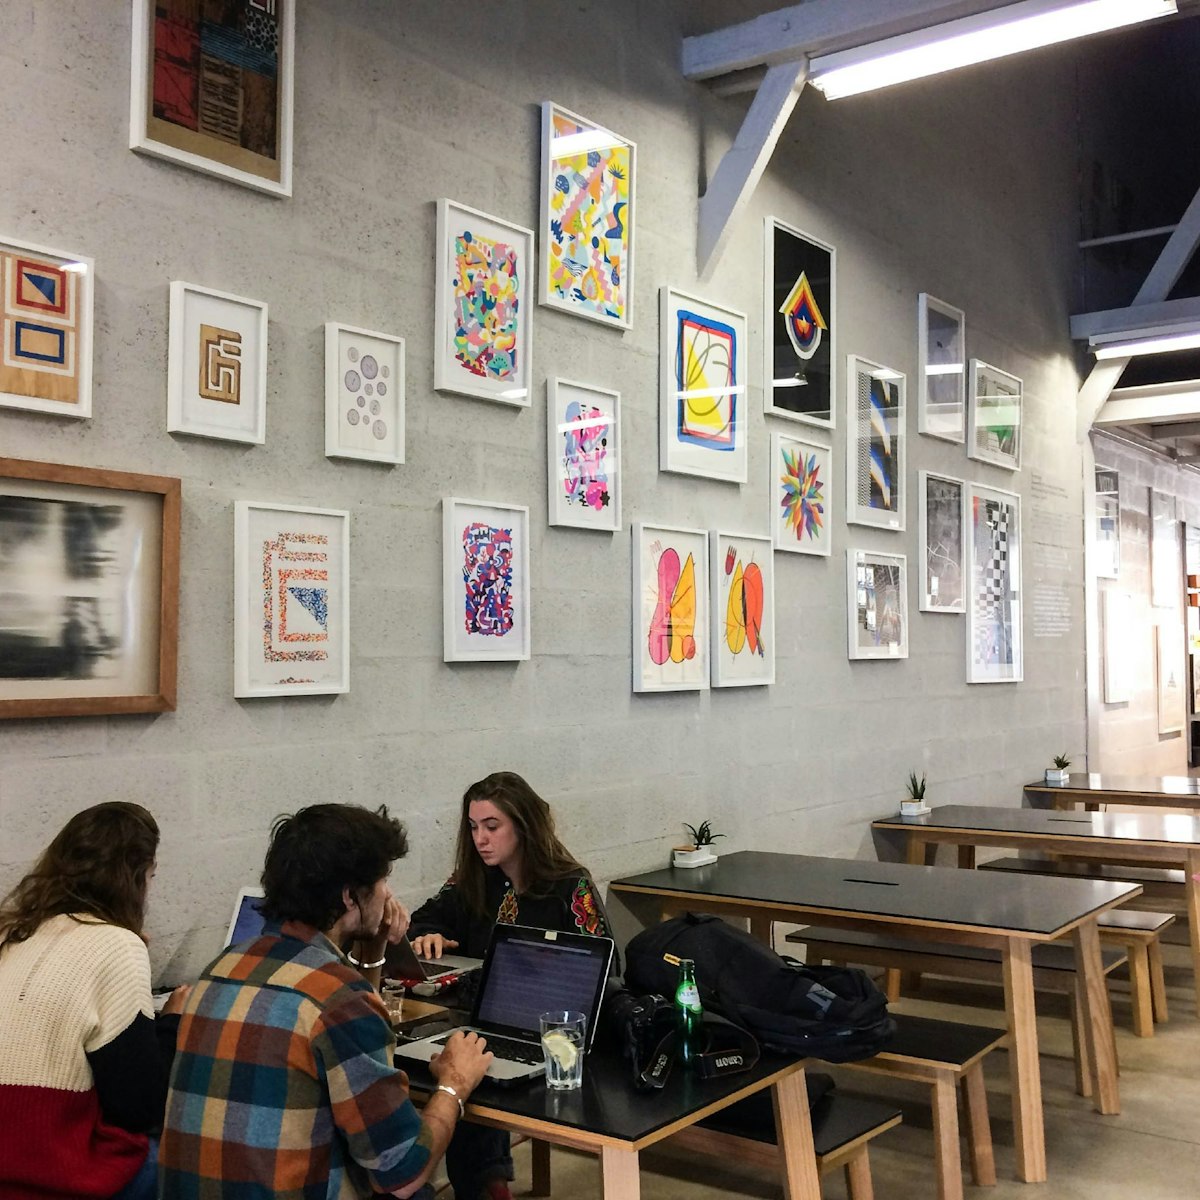 Students at Montana Lisboa Café